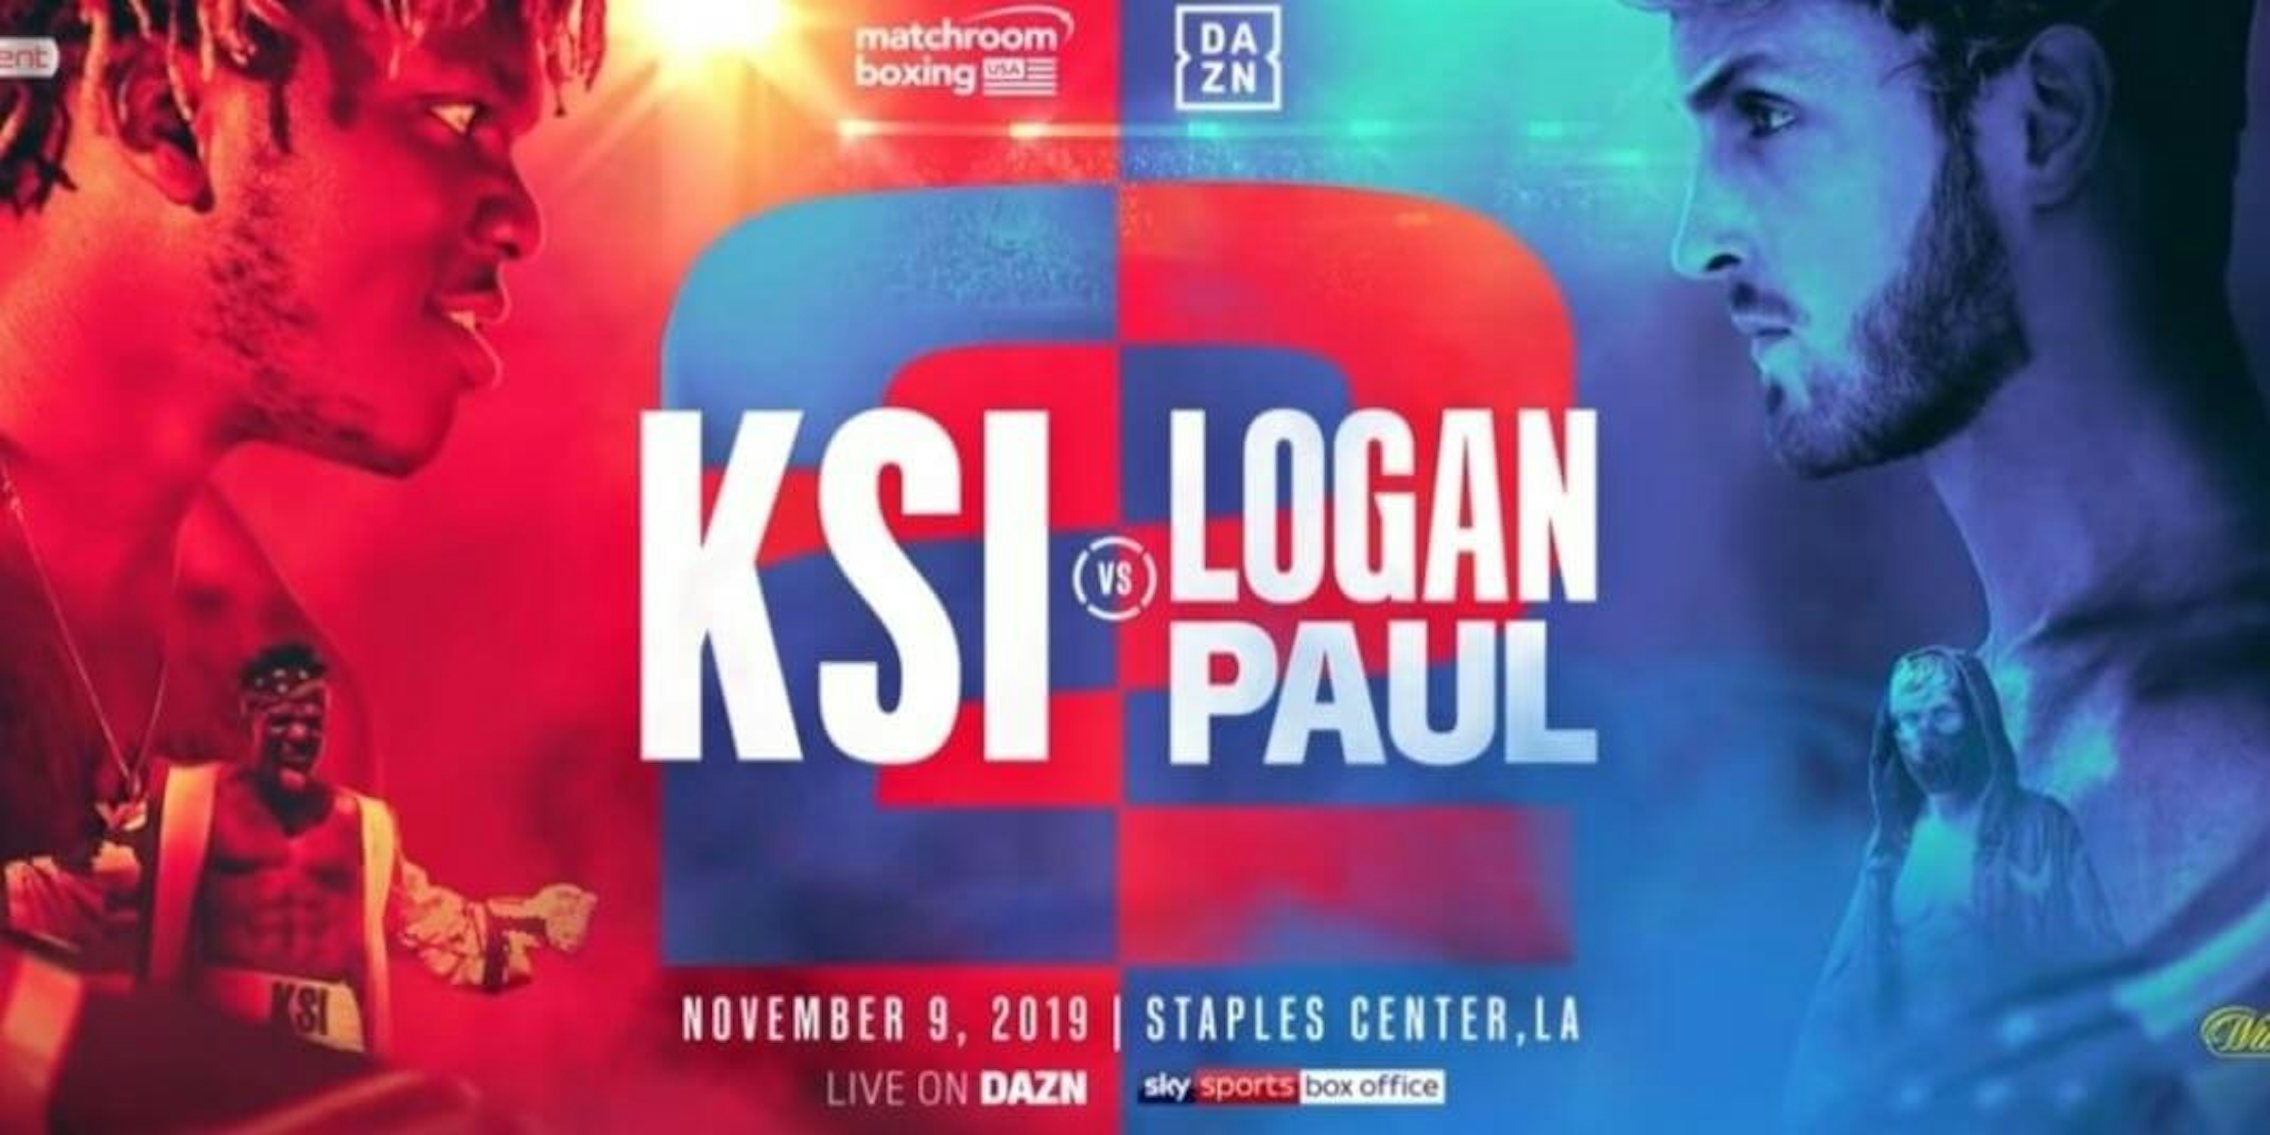 Logan Paul vs KSI slow ticket sales